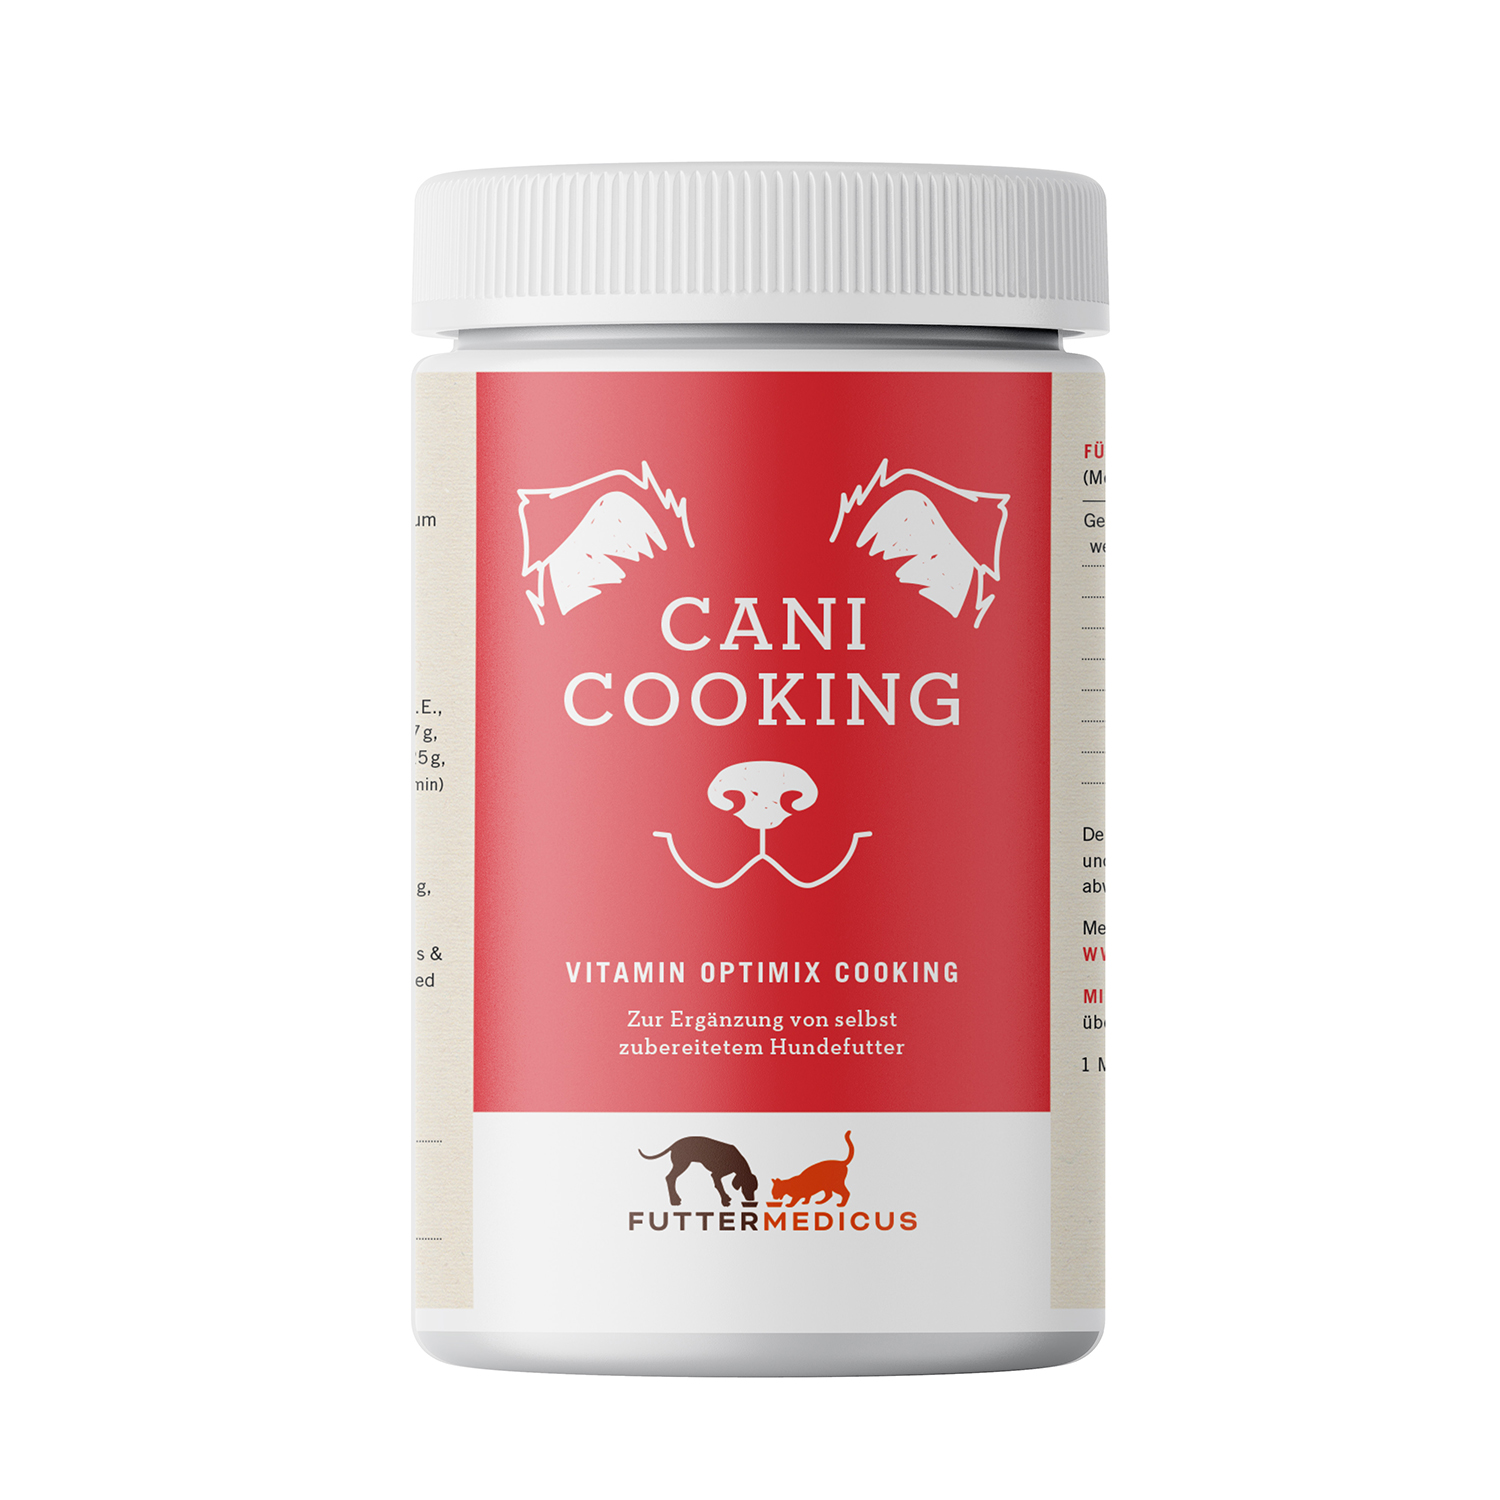 Cani Cooking von Futtermedicus – 250g